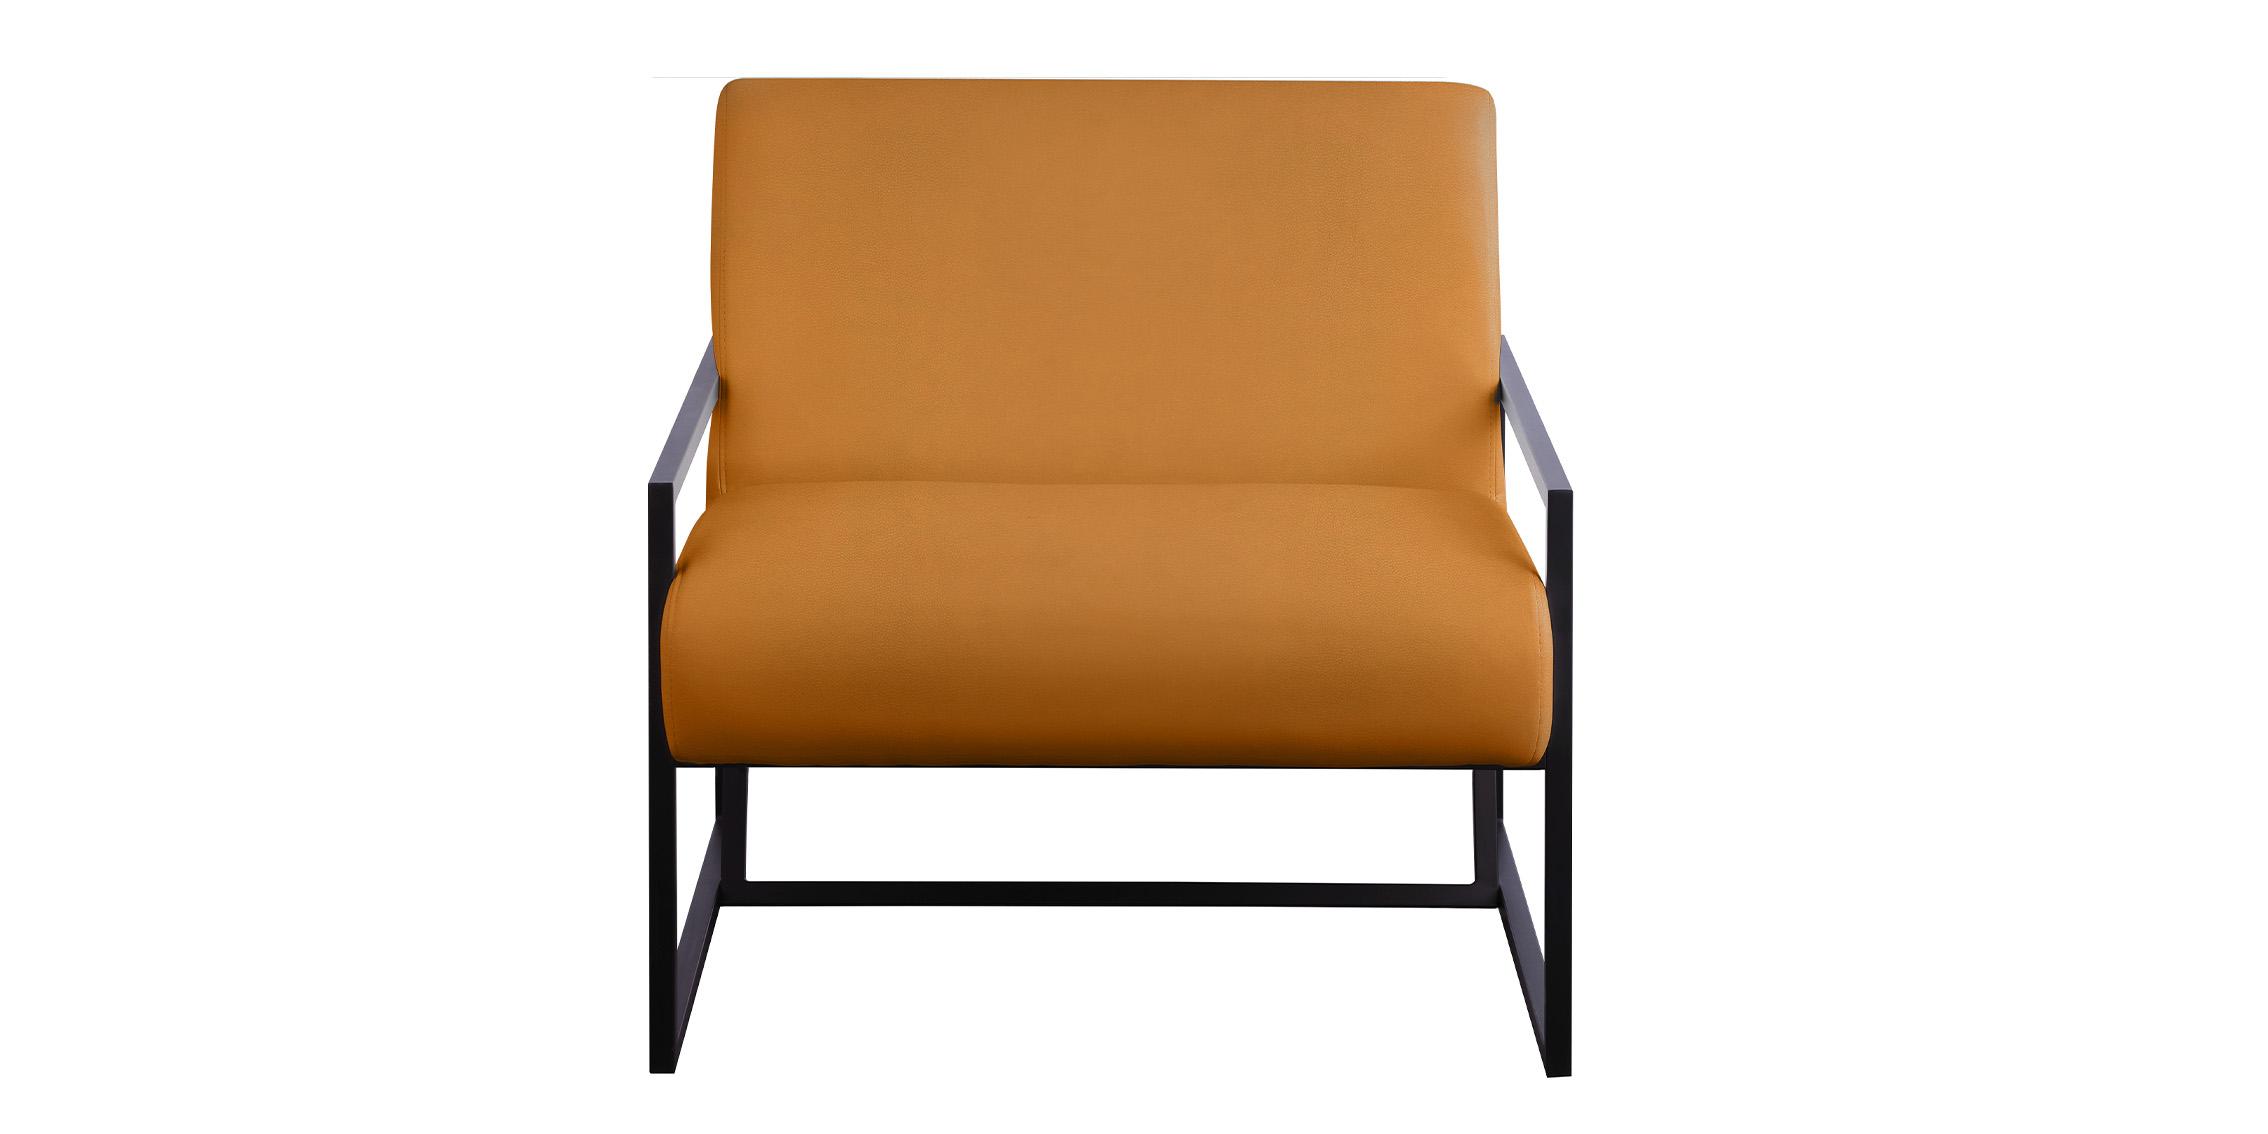 

    
535Cognac-Set-2 Cognac Faux Leather & Black Metal Chair Set 2 INDUSTRY 535Cognac Meridian Modern
